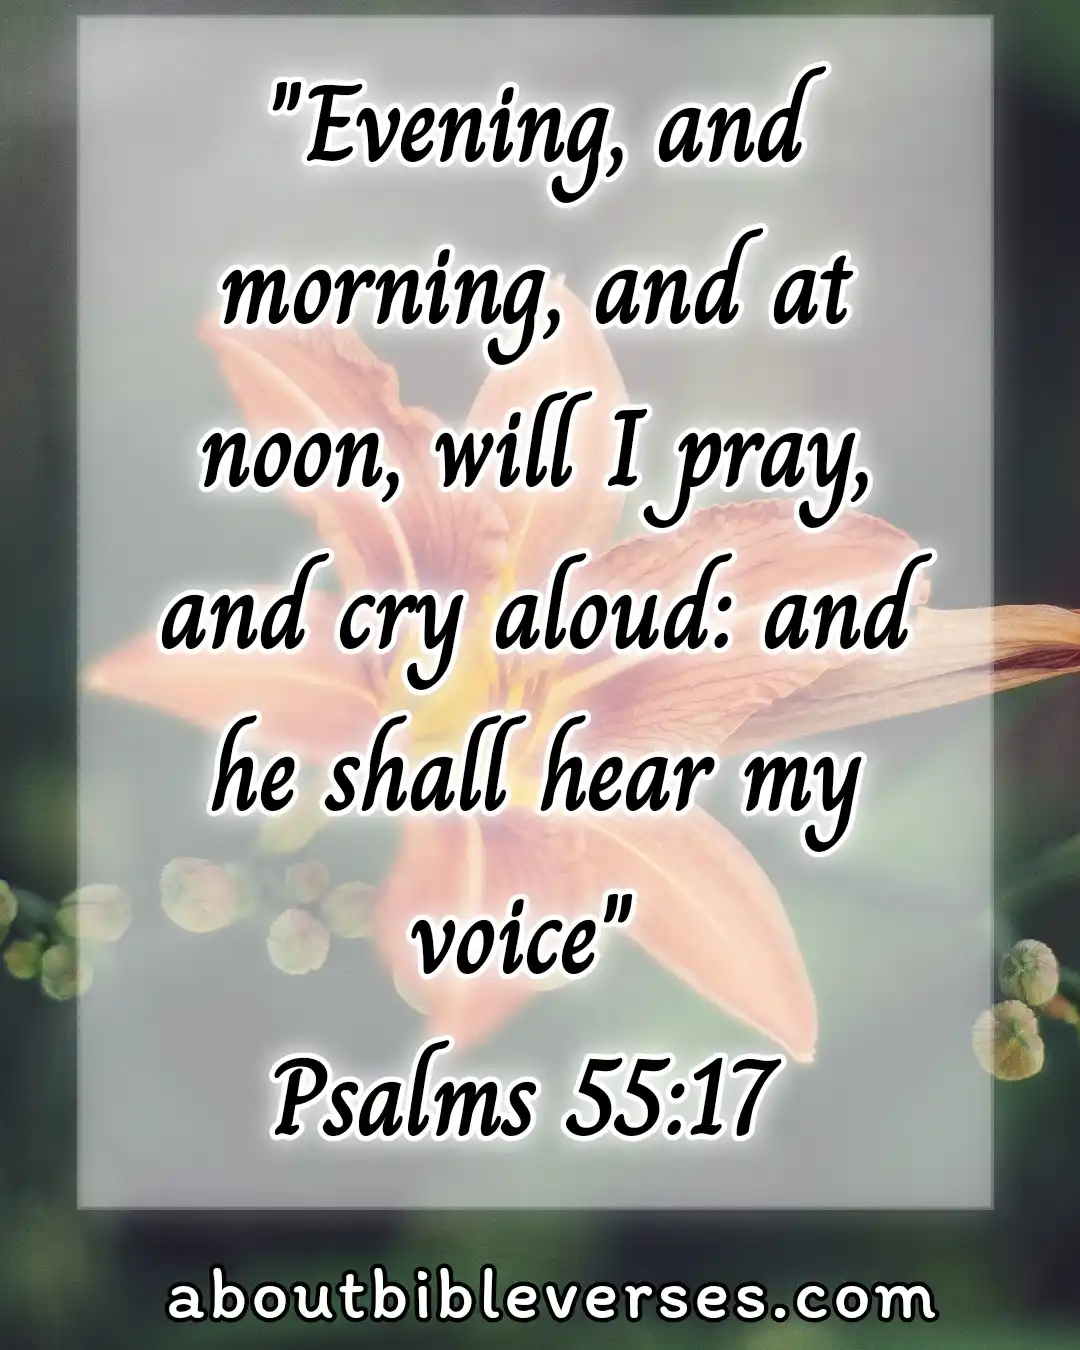 Good morning bible verses (Psalm 55:17)